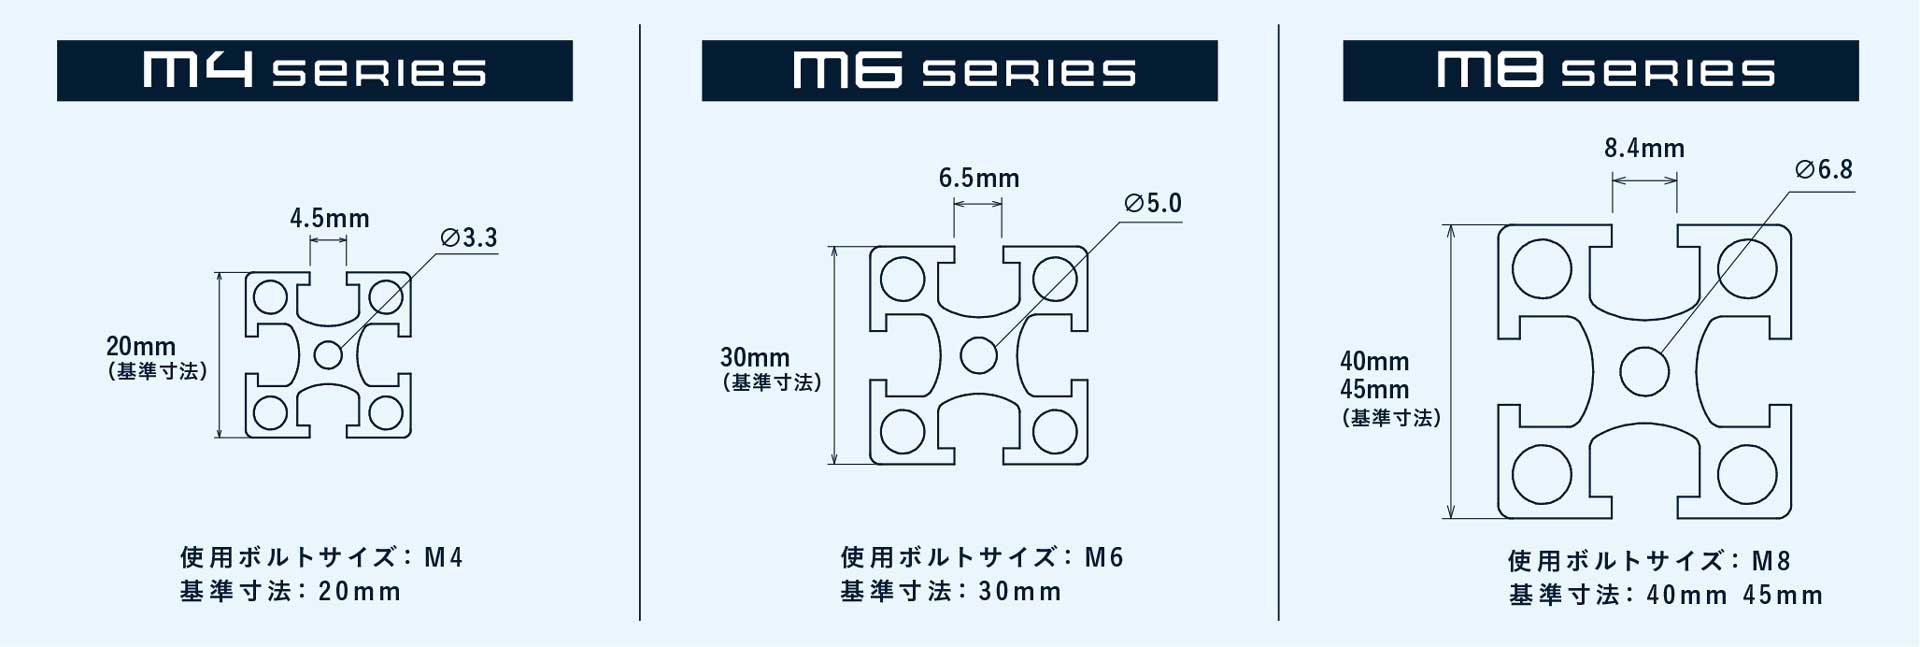 UNI FRAMEはM4・M6・M8の3シリーズがあります。